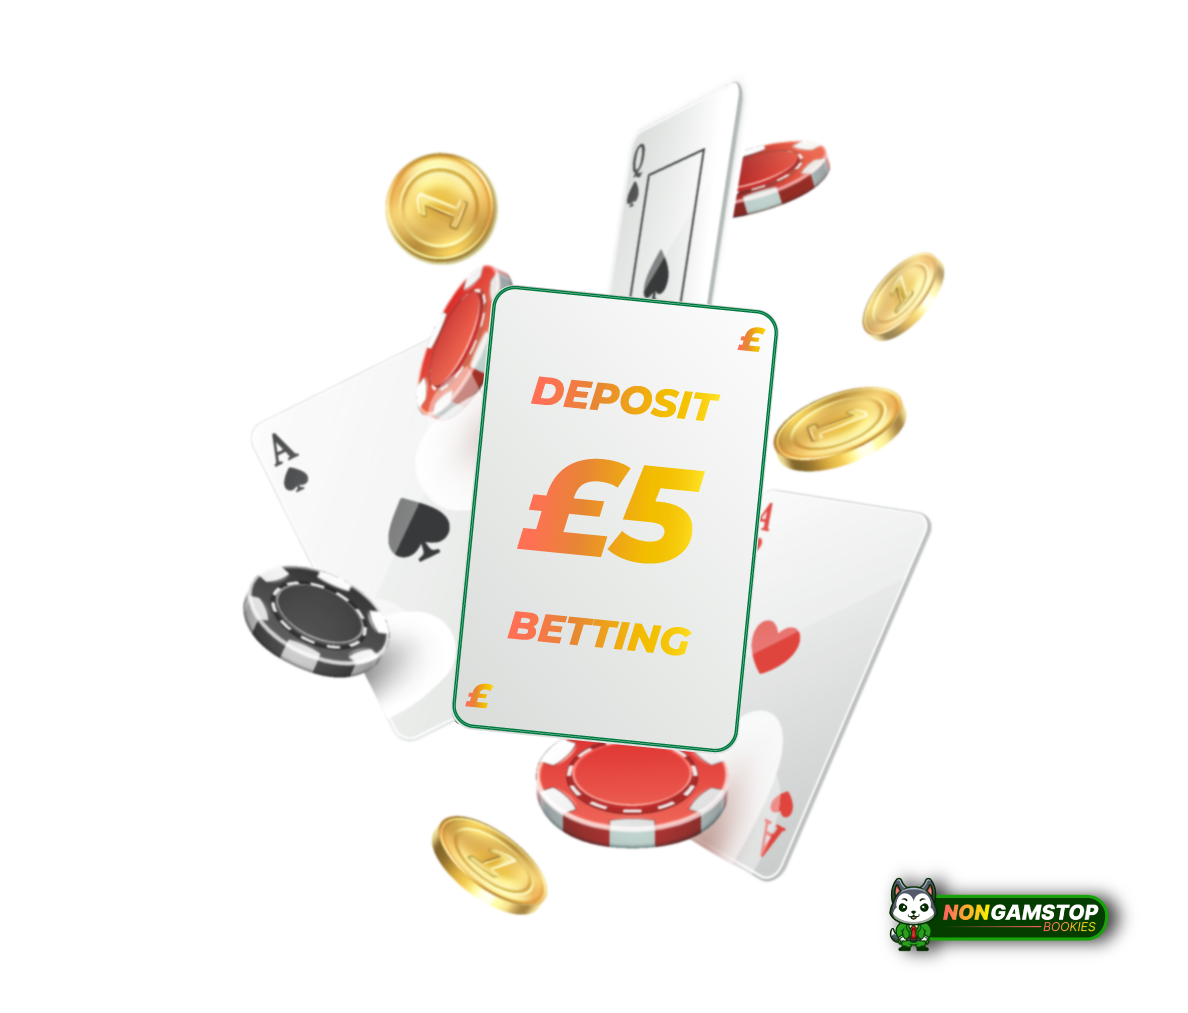 £5 Deposit Betting banner